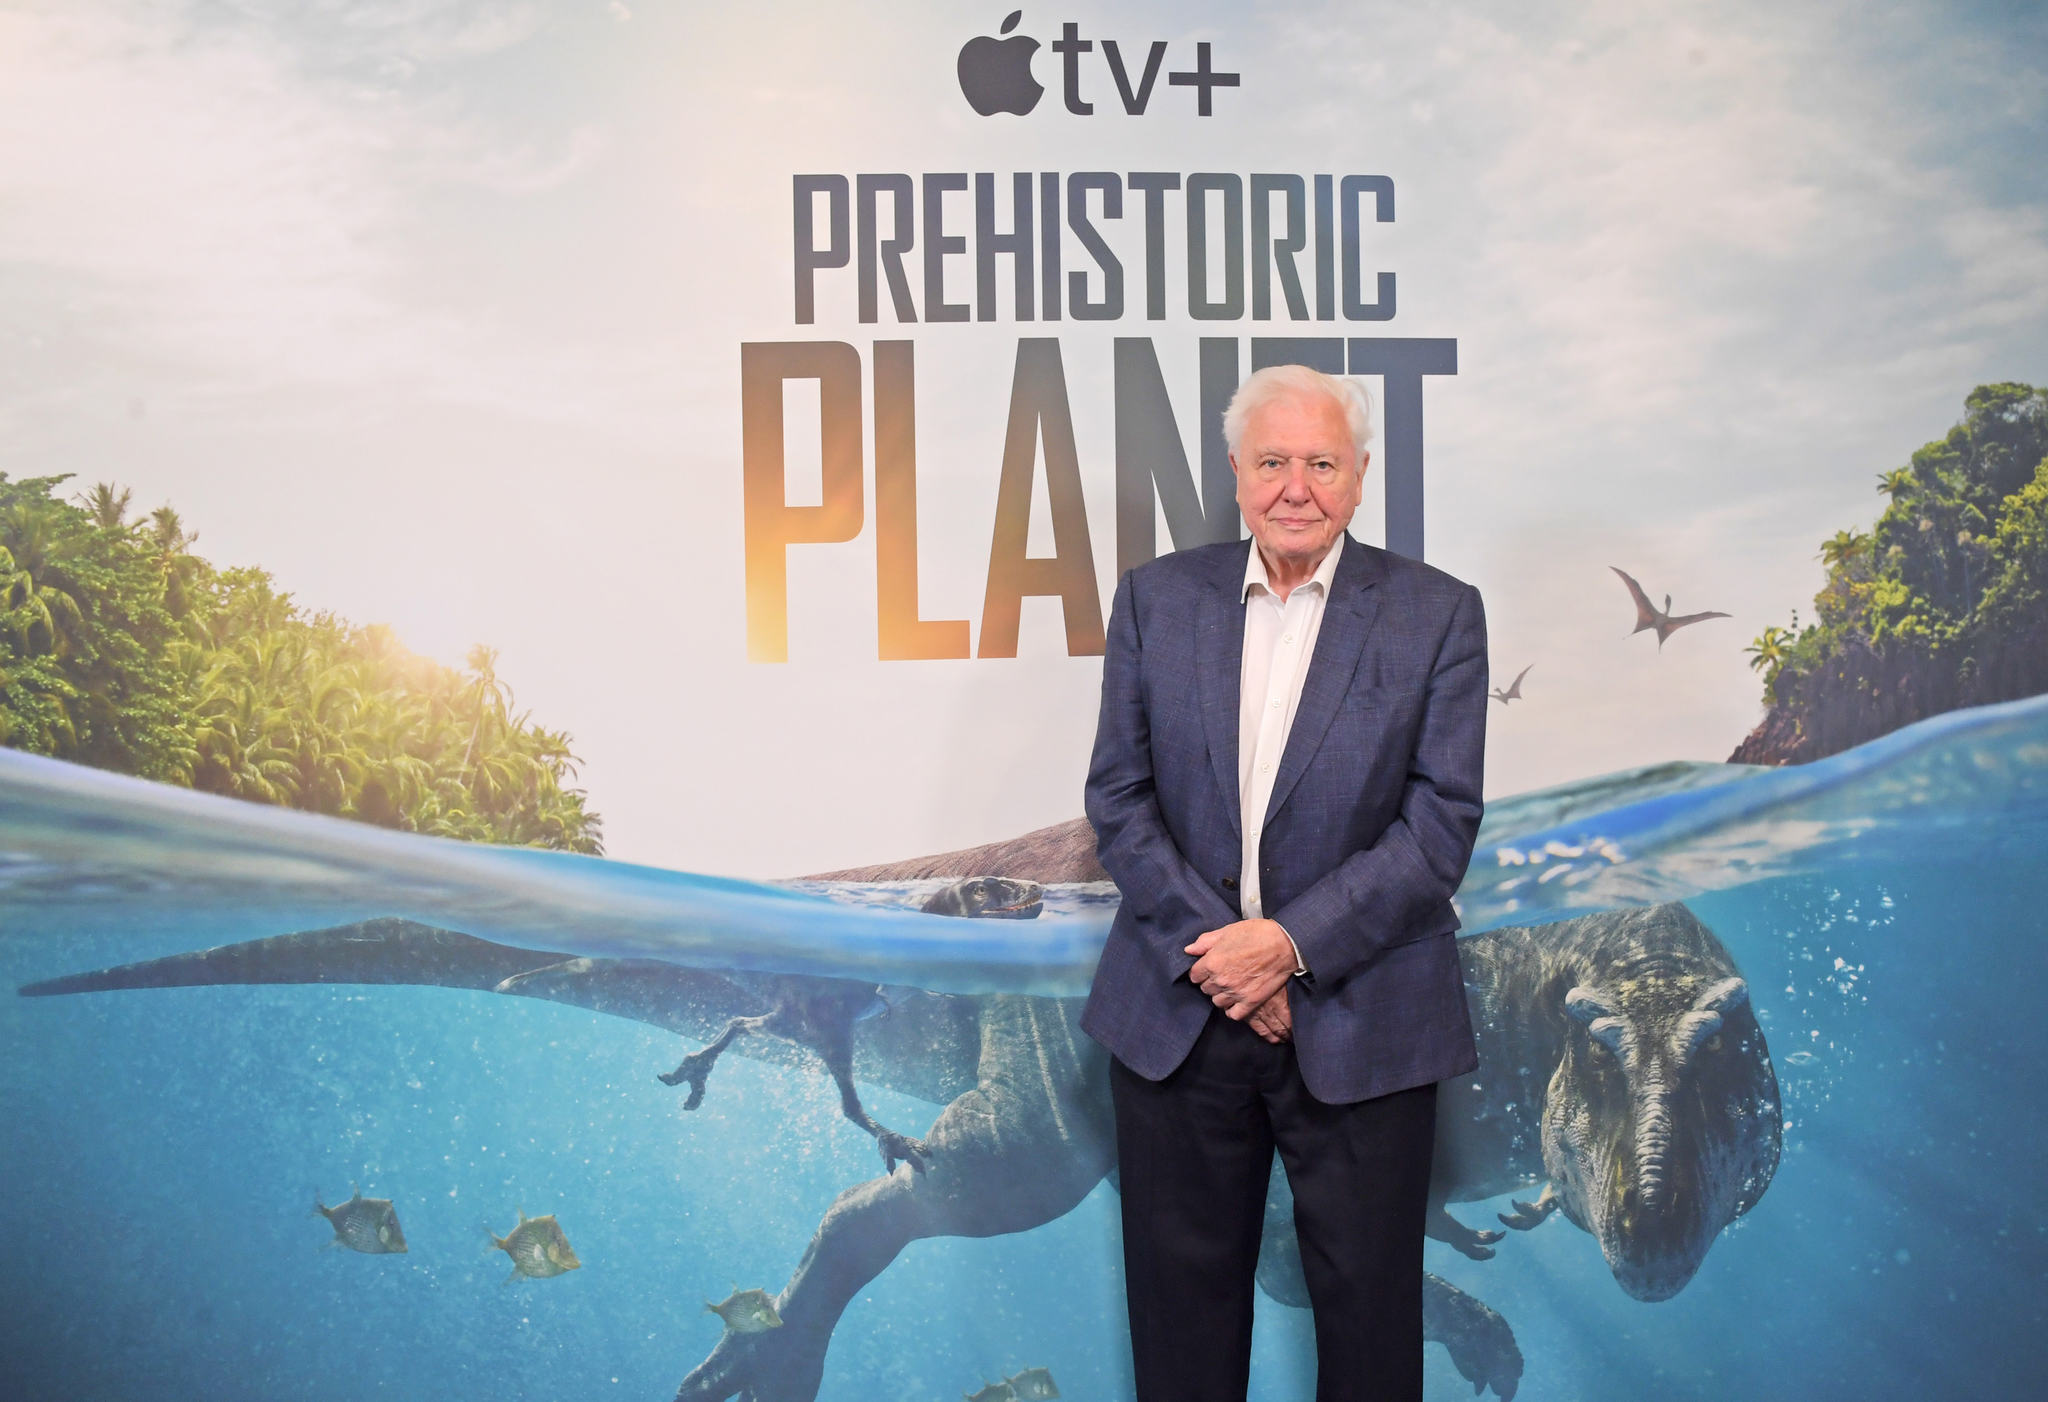 Sir David Attenborough in front of Prehistoric Planet artwork